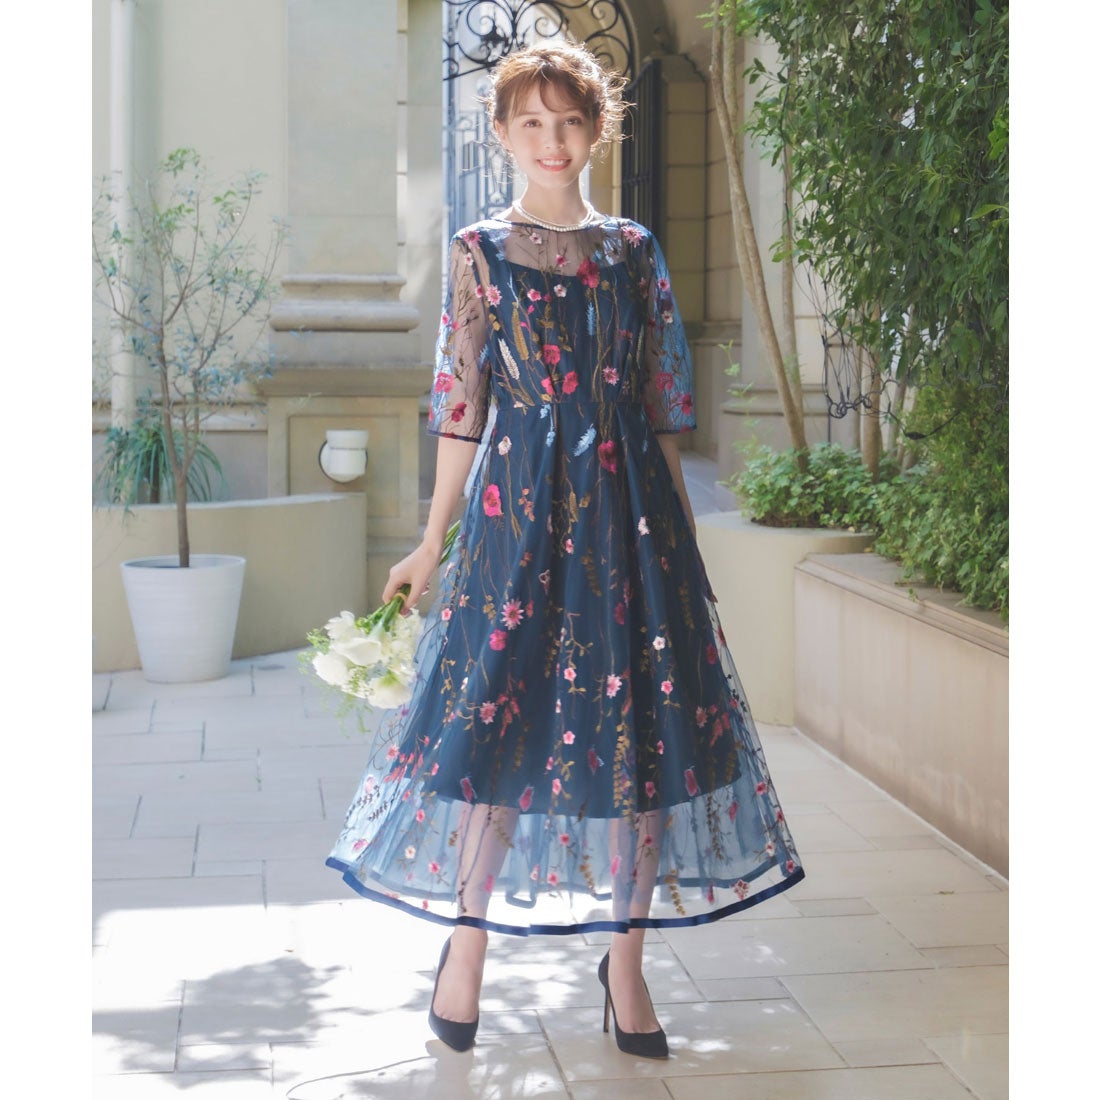 【GIRL】ヴィンテージ風チュールフラワー刺繍レースミモレ丈フレア結婚式ドレス